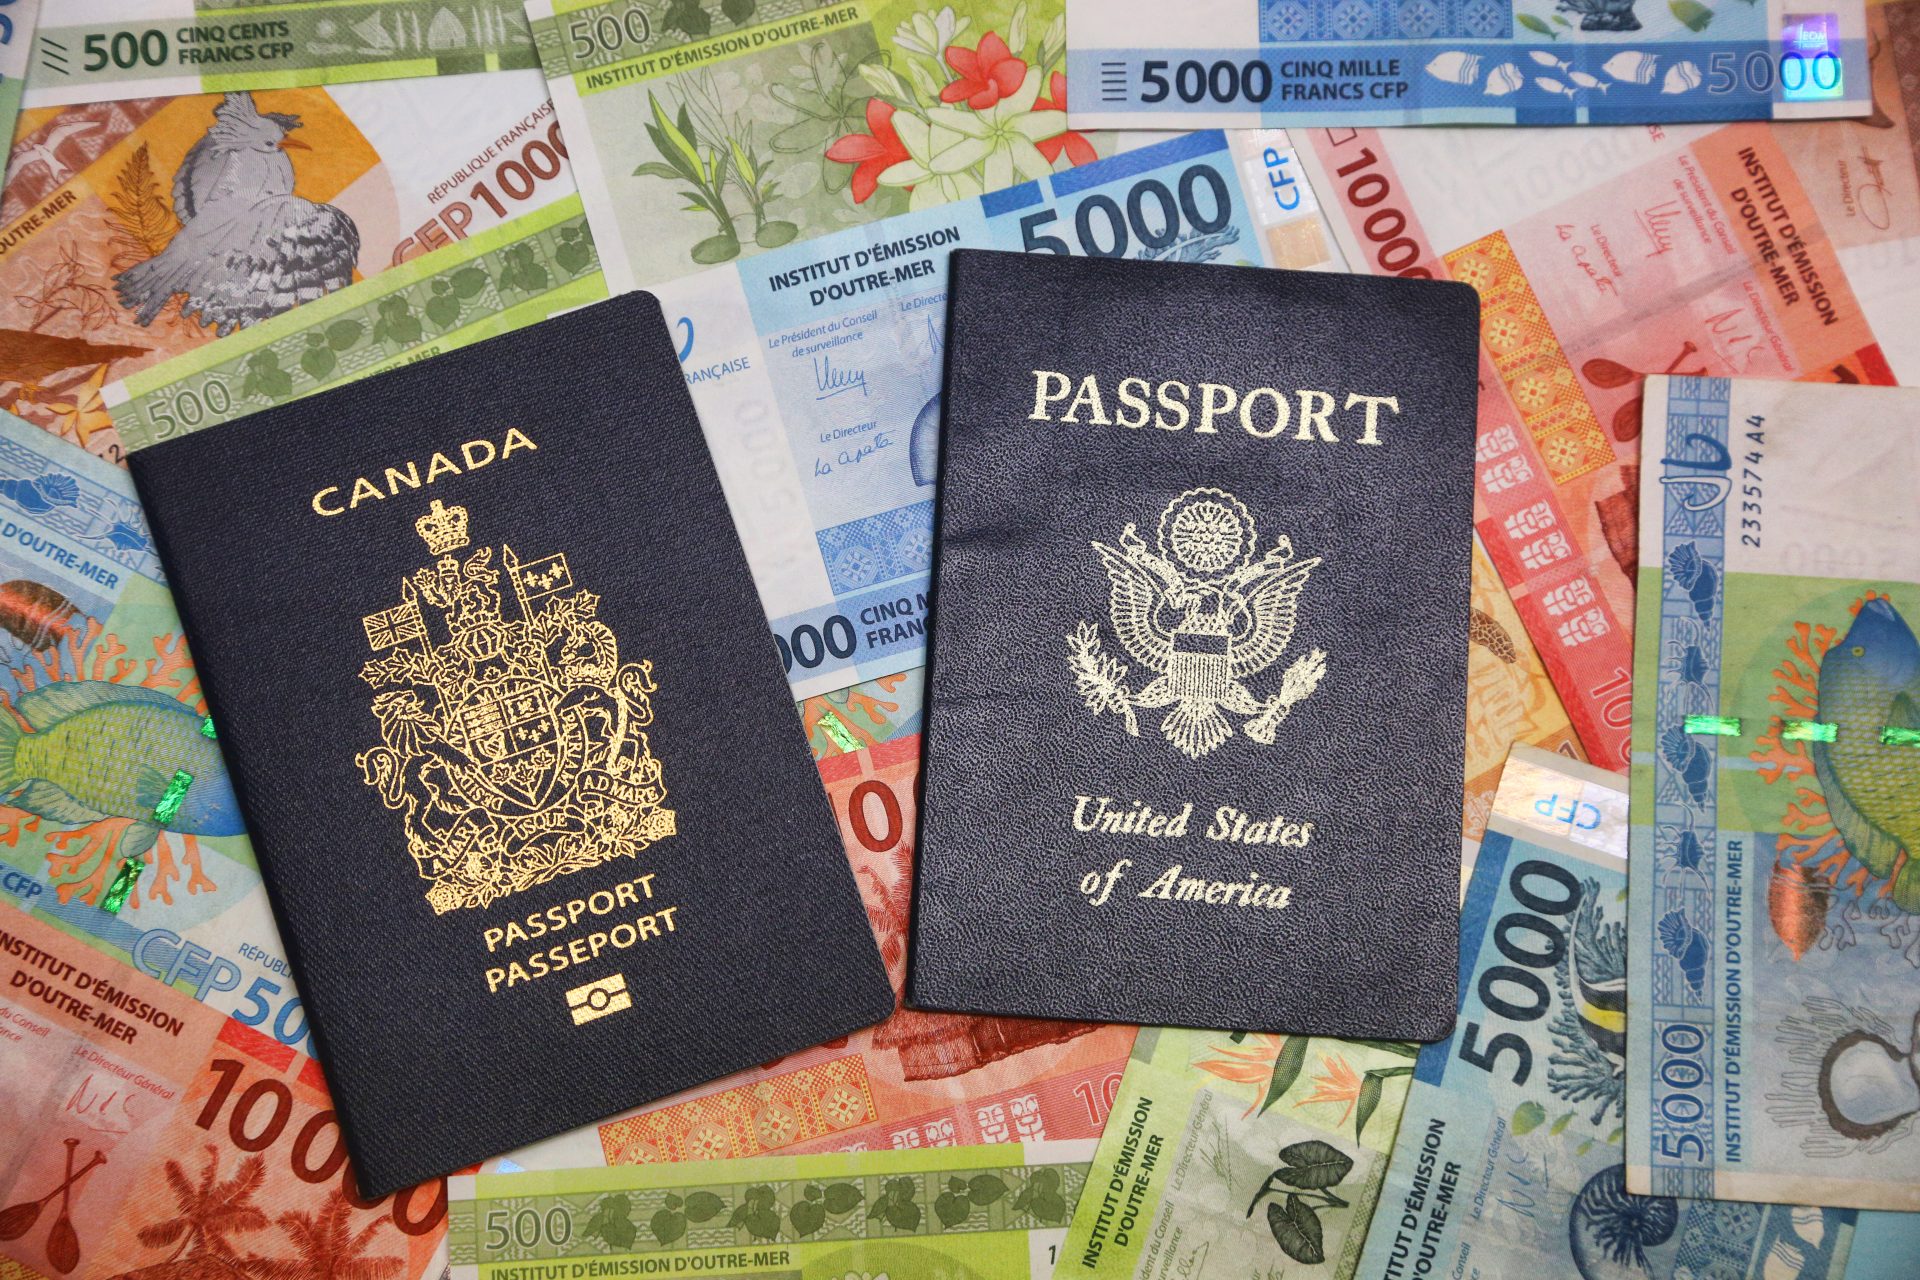 An increase in additional passport demand 